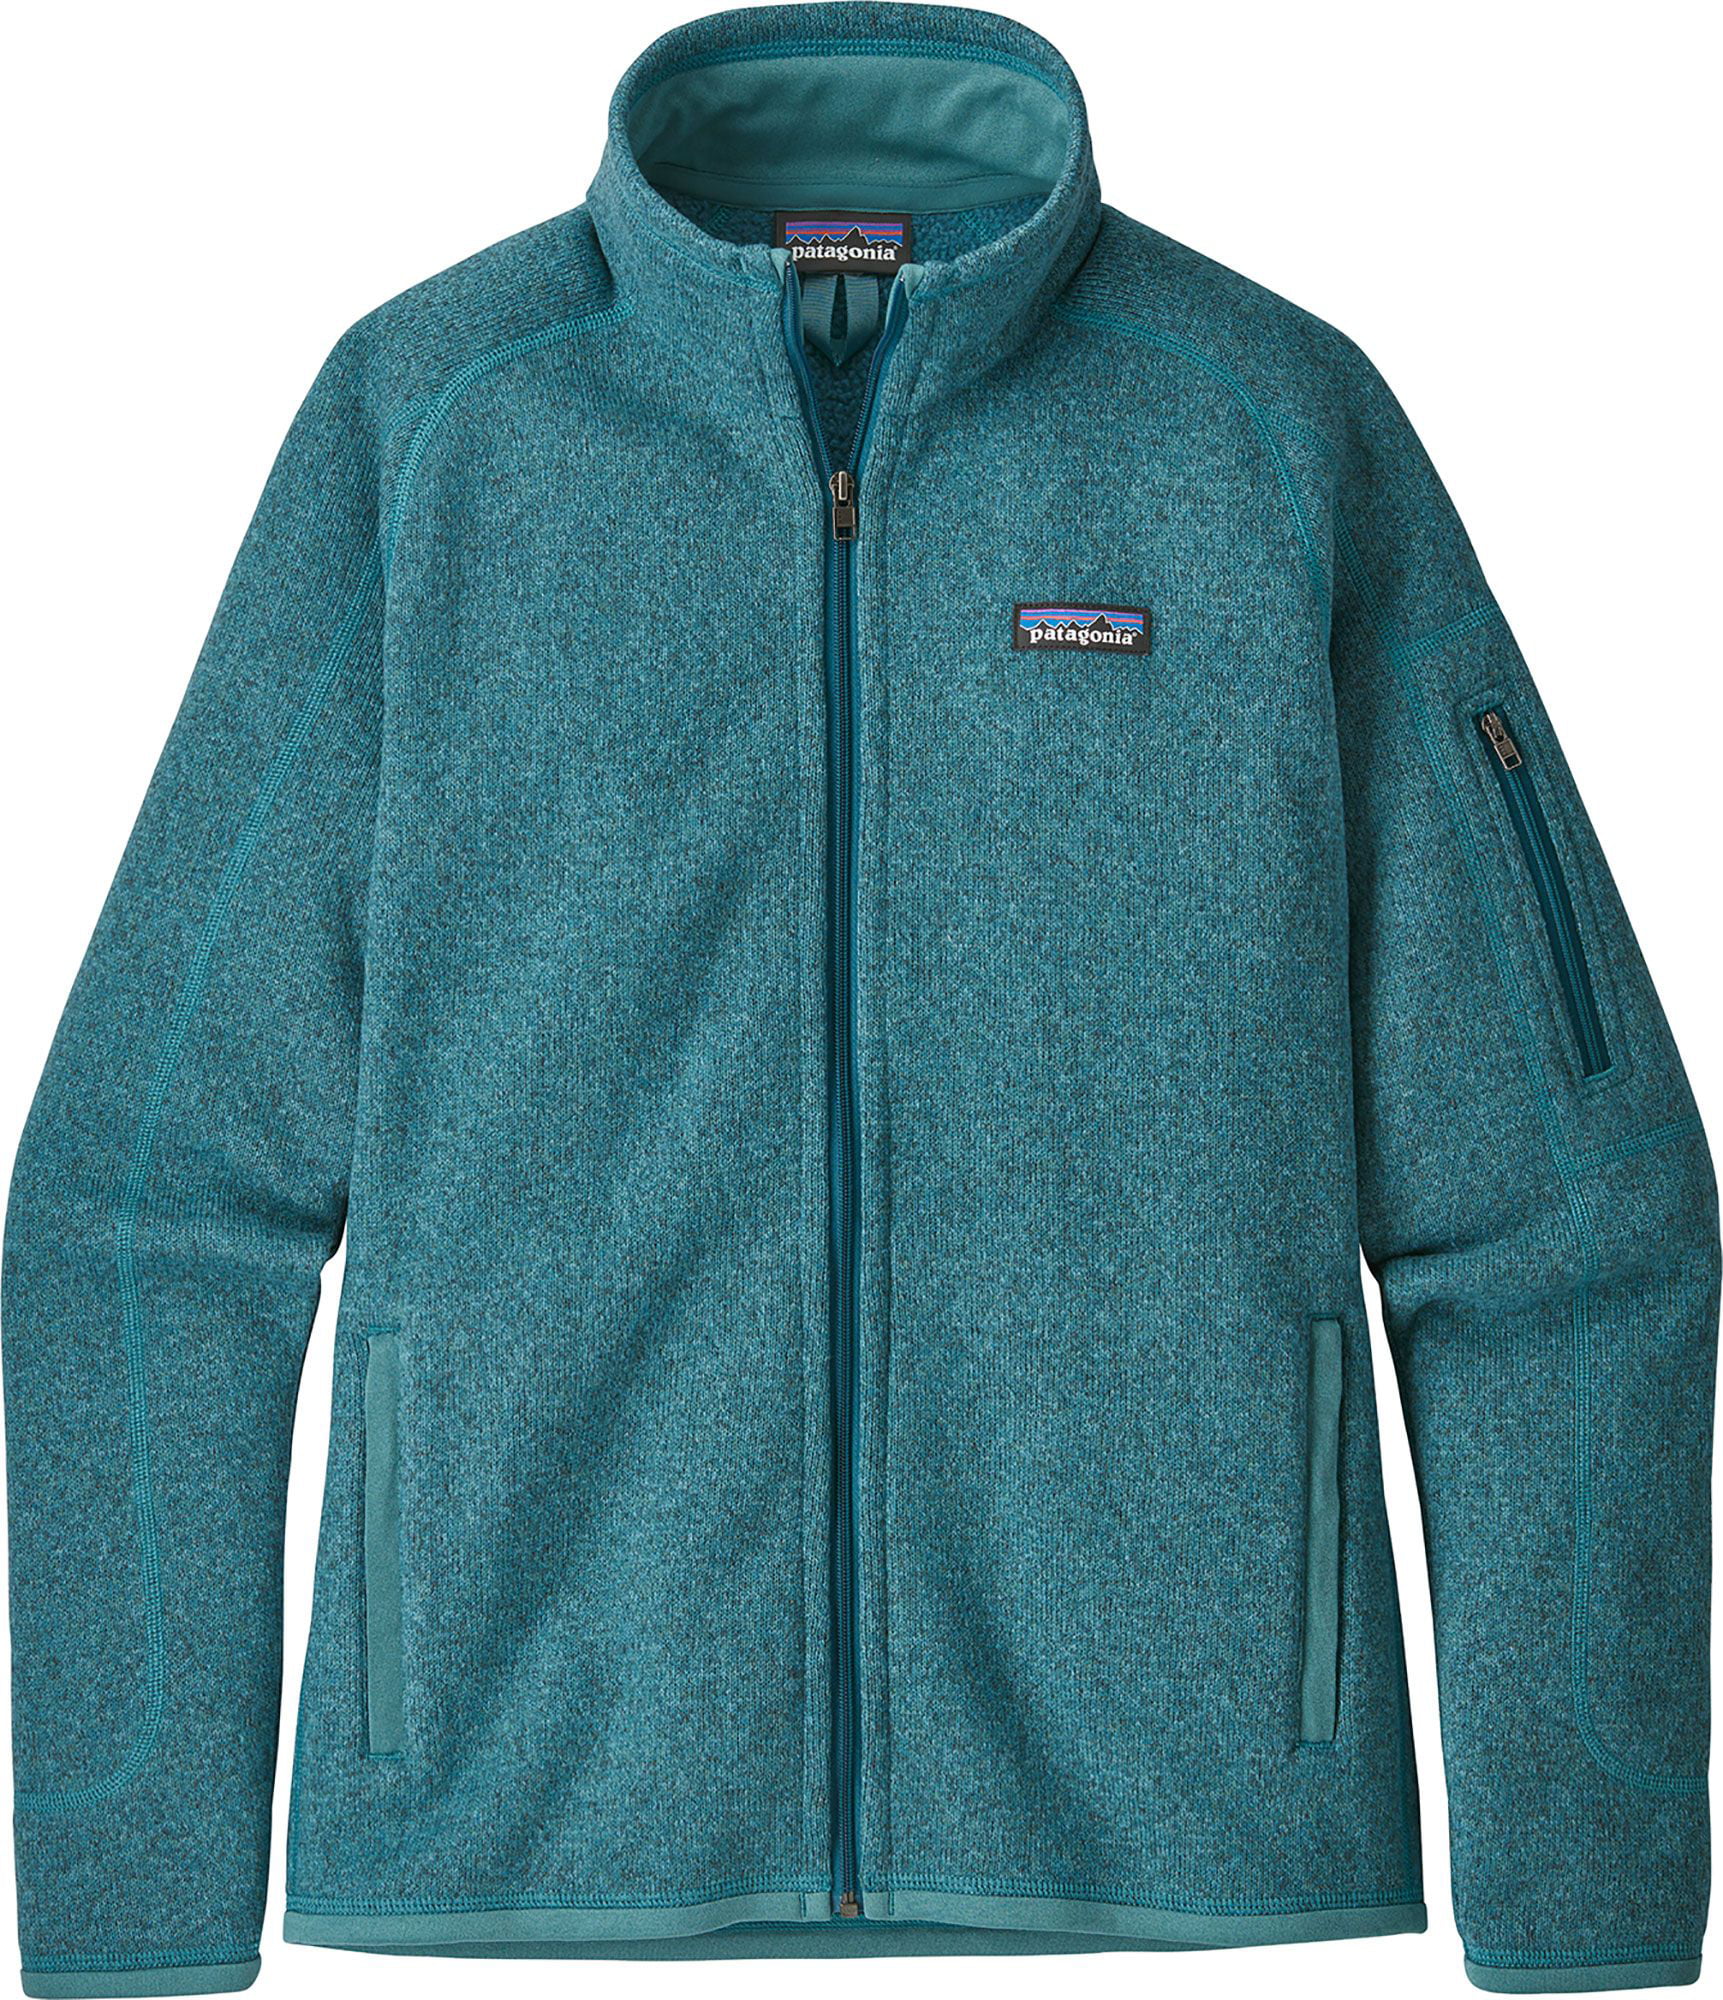 Patagonia Women's Better Sweater Fleece Jacket - Walmart.com